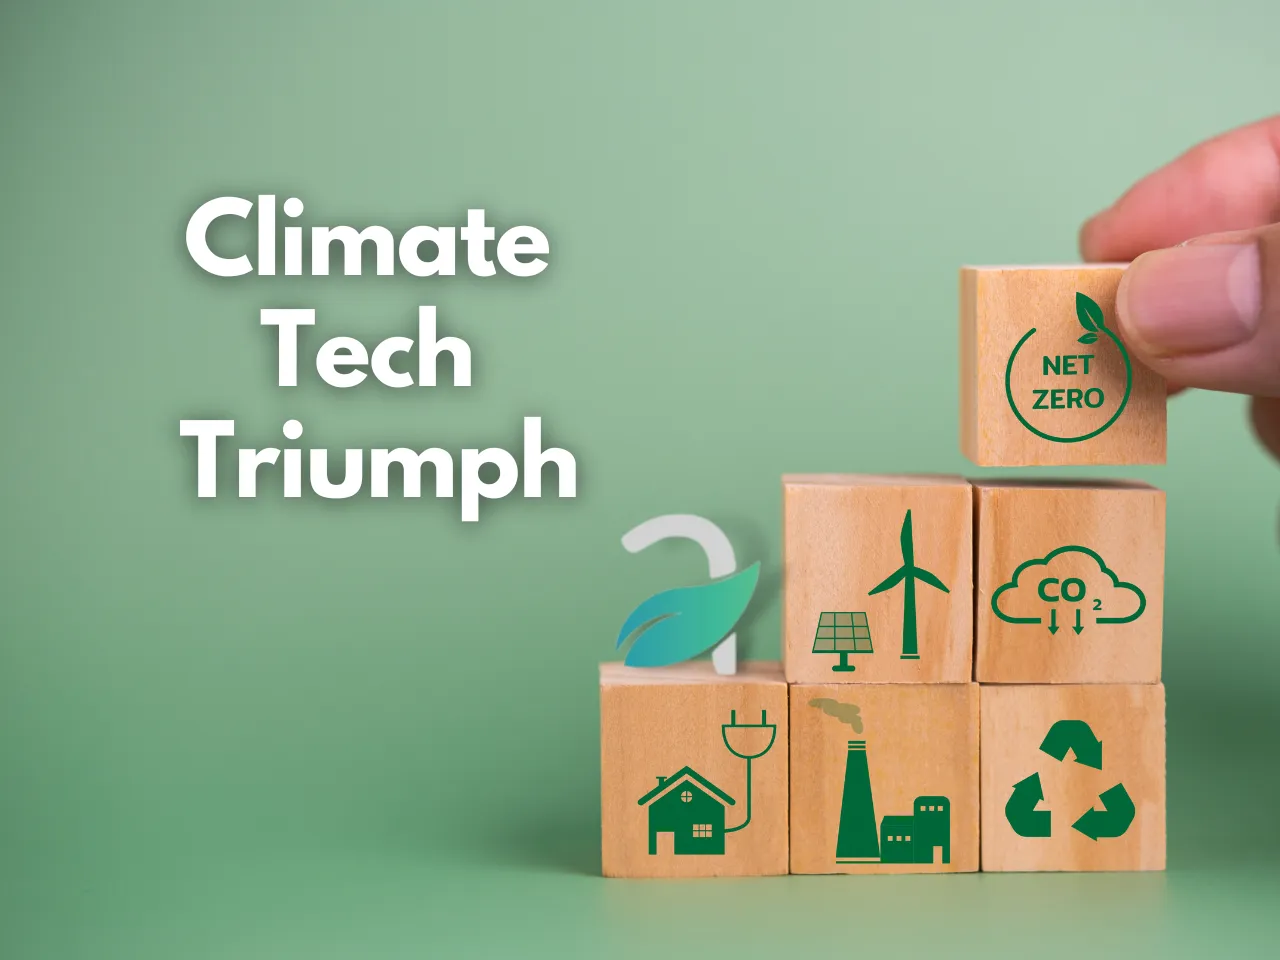 Climate Tech Startup Aurassure Raises Fresh Funding In Latest Round